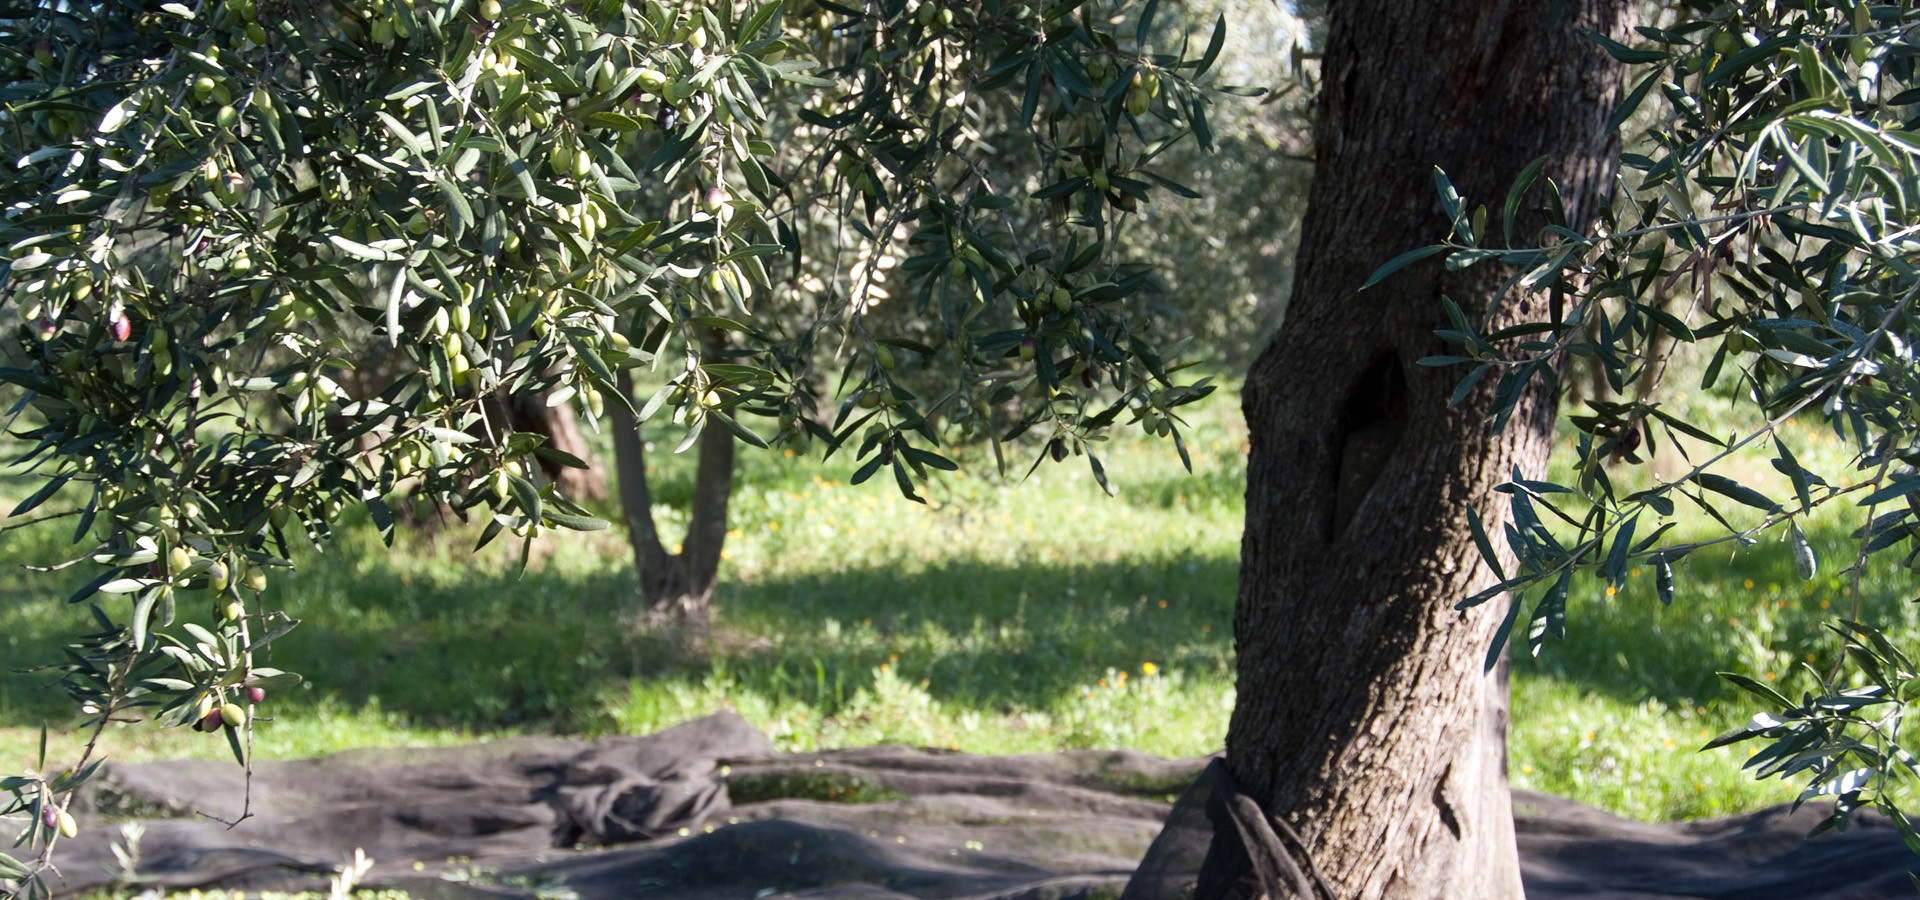 Extra Virgin Olive Oil Harvesting Campaign 2020